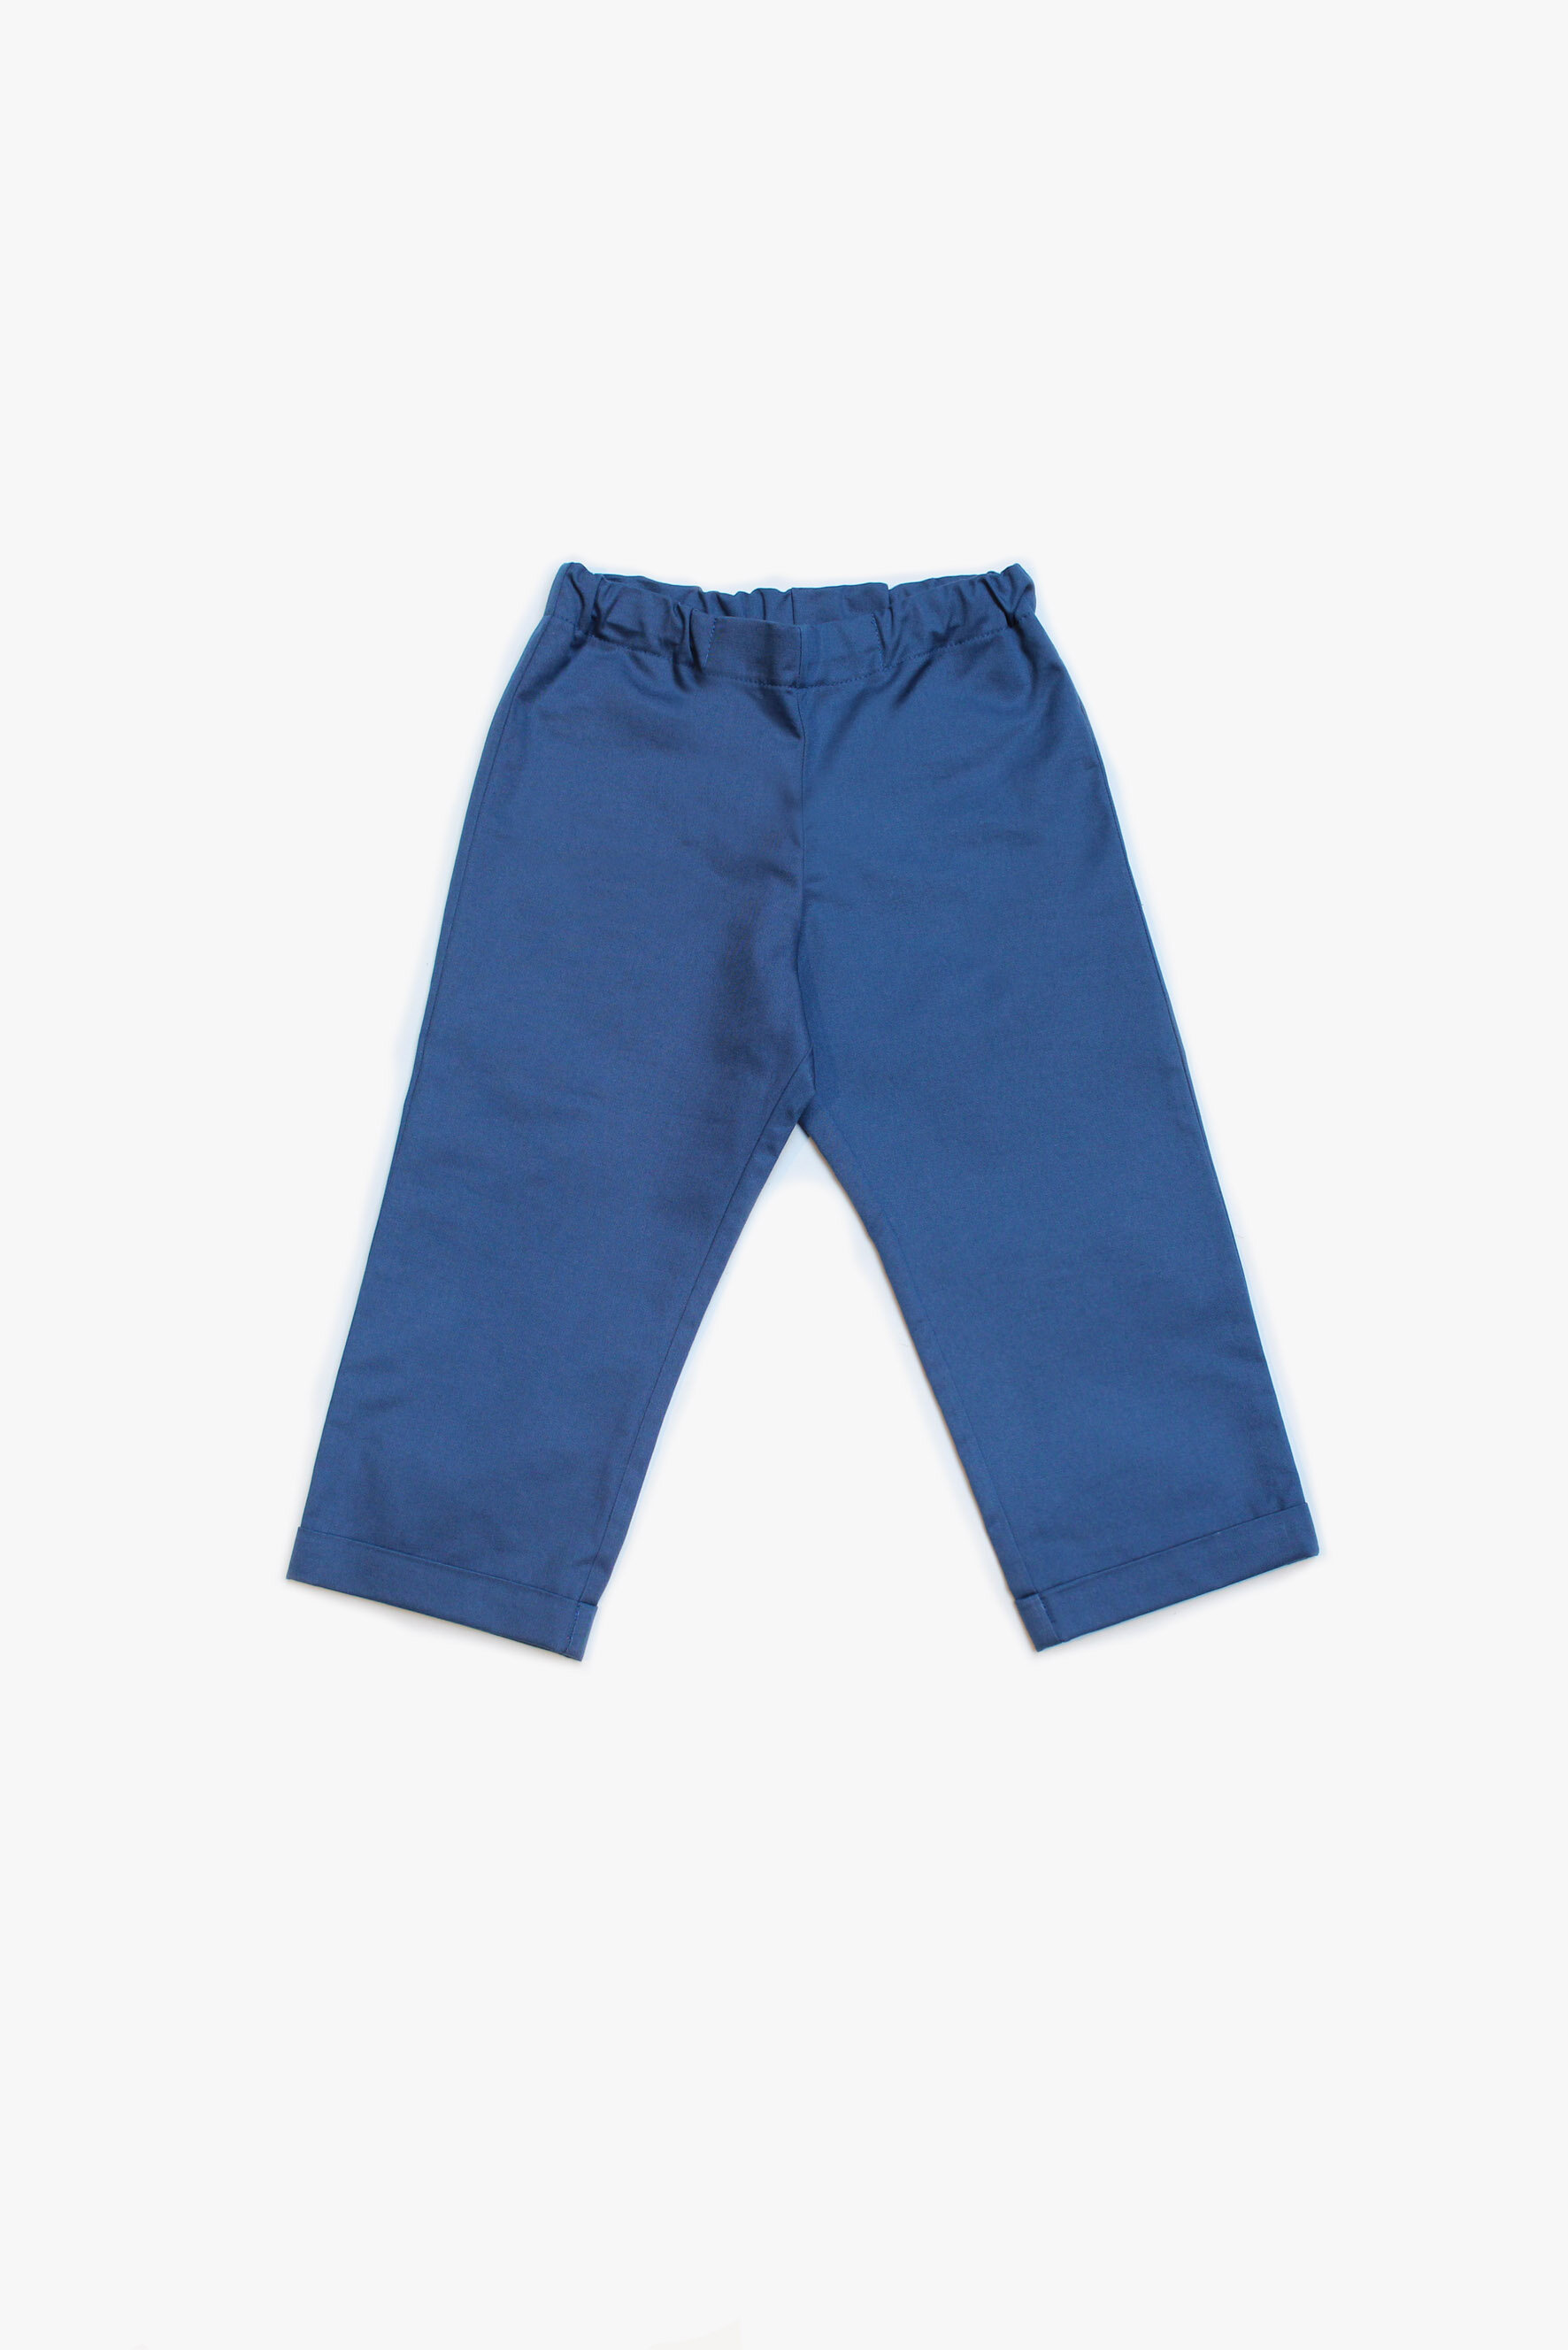 Pantaloni unisex blu